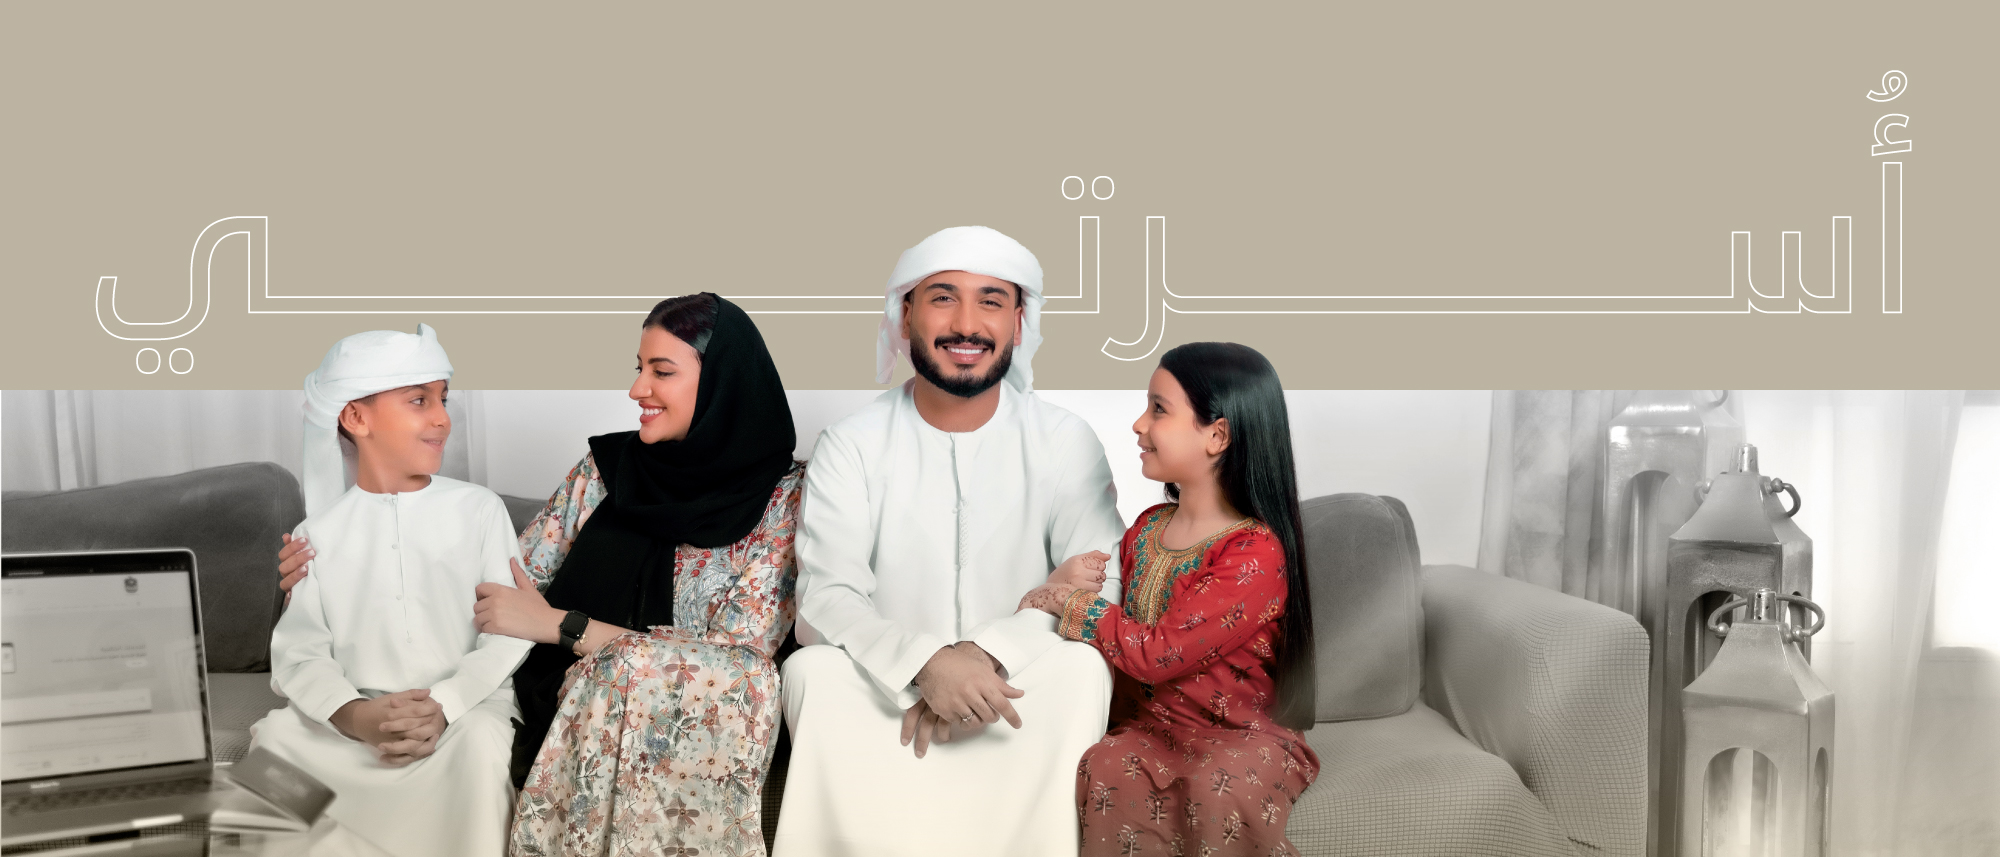 DubaiDestinations campaign returns to spotlight city's unique winter  experiences - Business - Travel - Emirates24